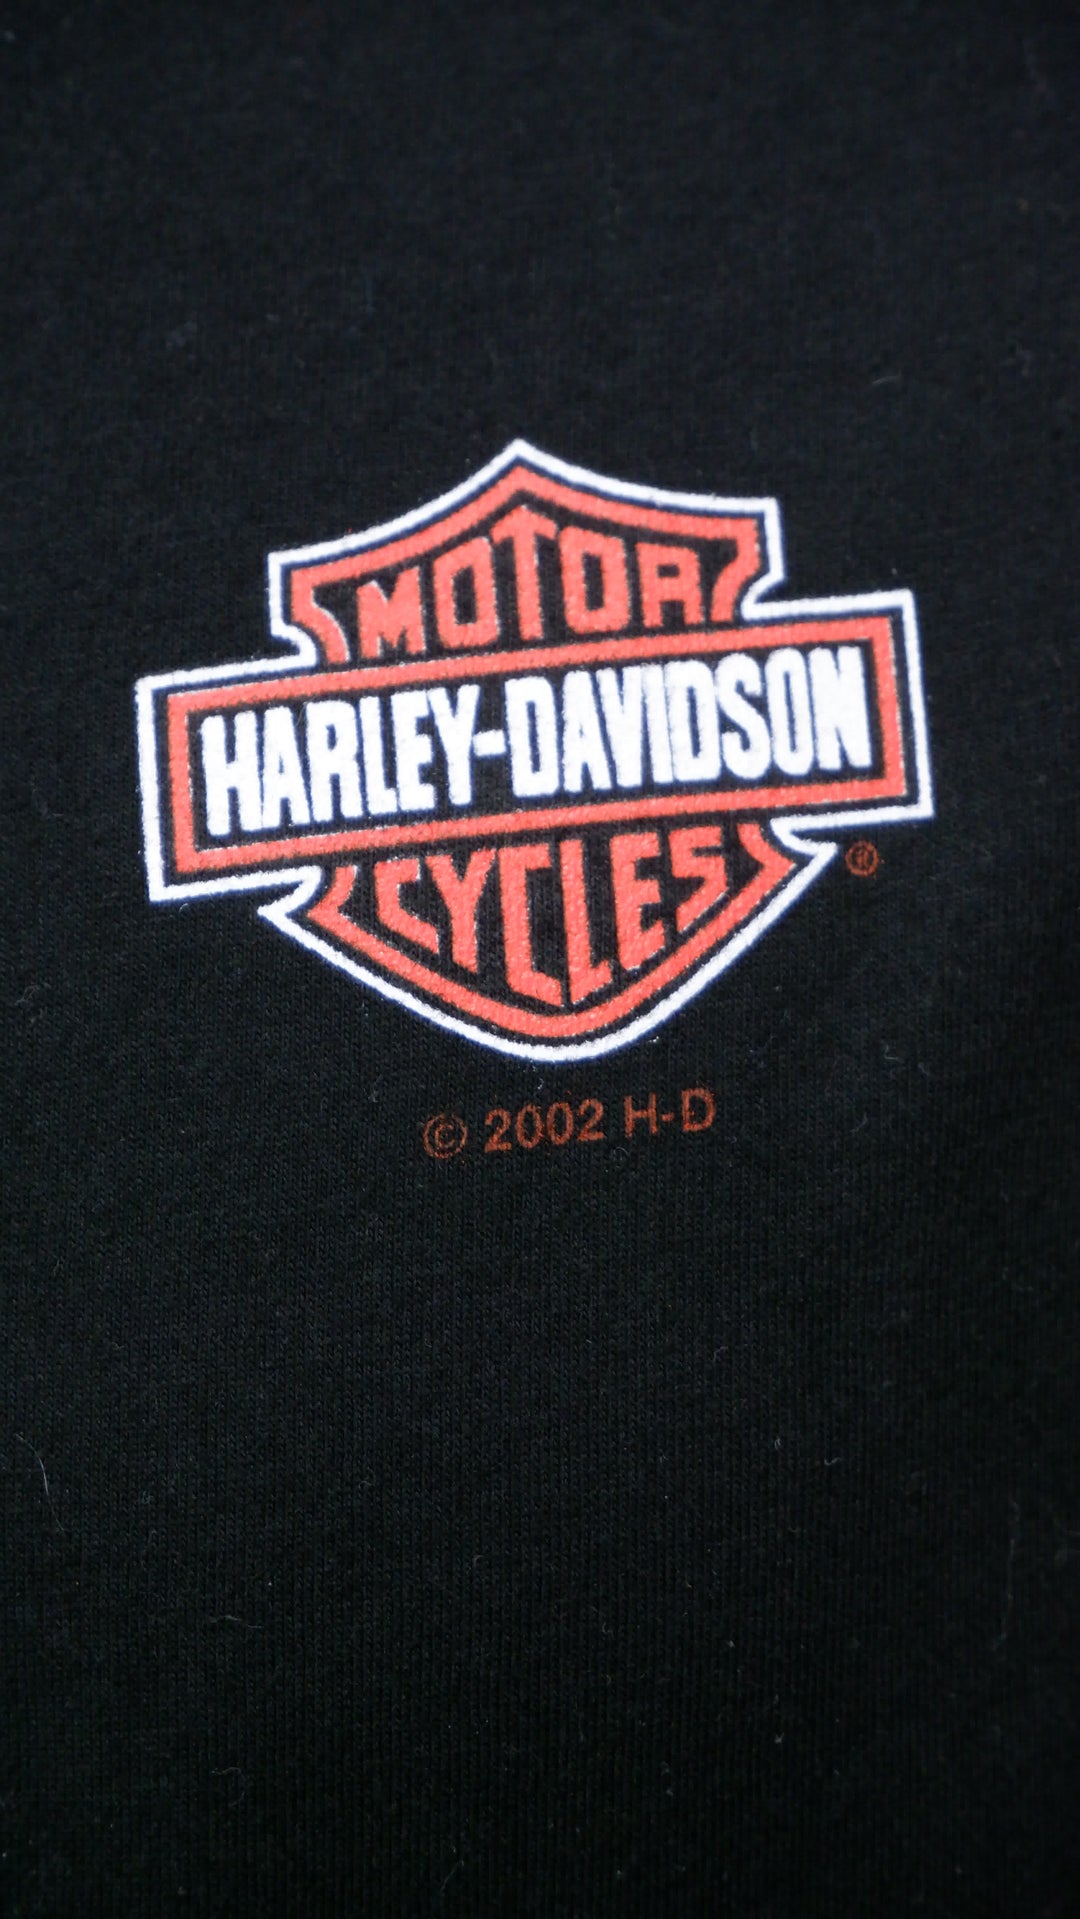 Y2K Harley Davidson Of St. Thomas Virgin Island VNTG T-Shirt